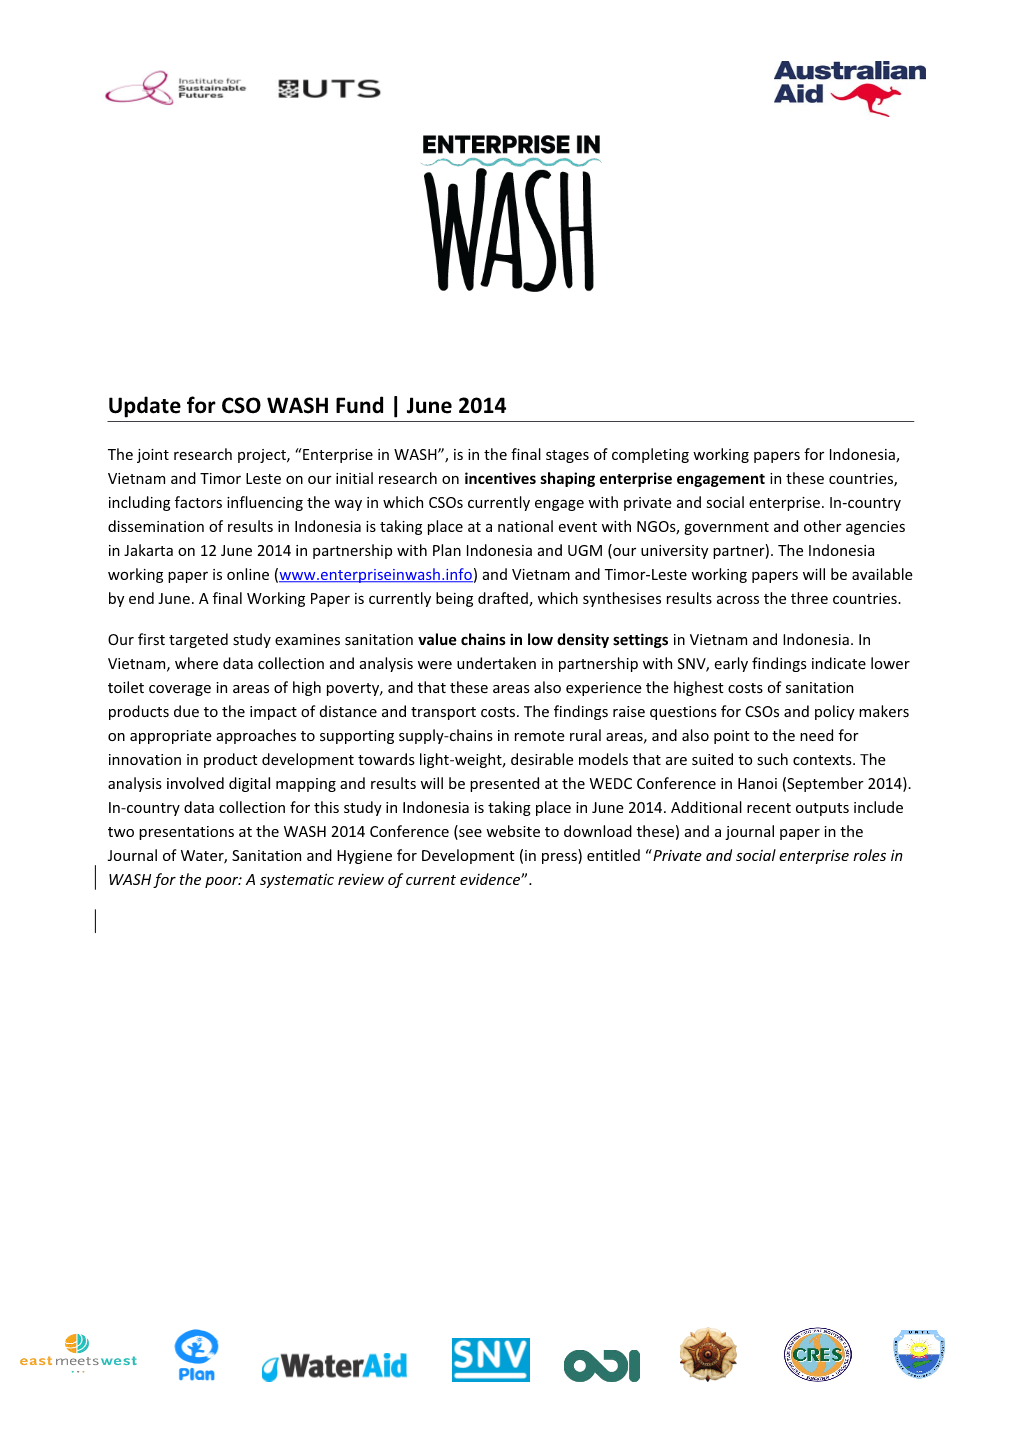 Updatefor CSO WASH Fund June 2014